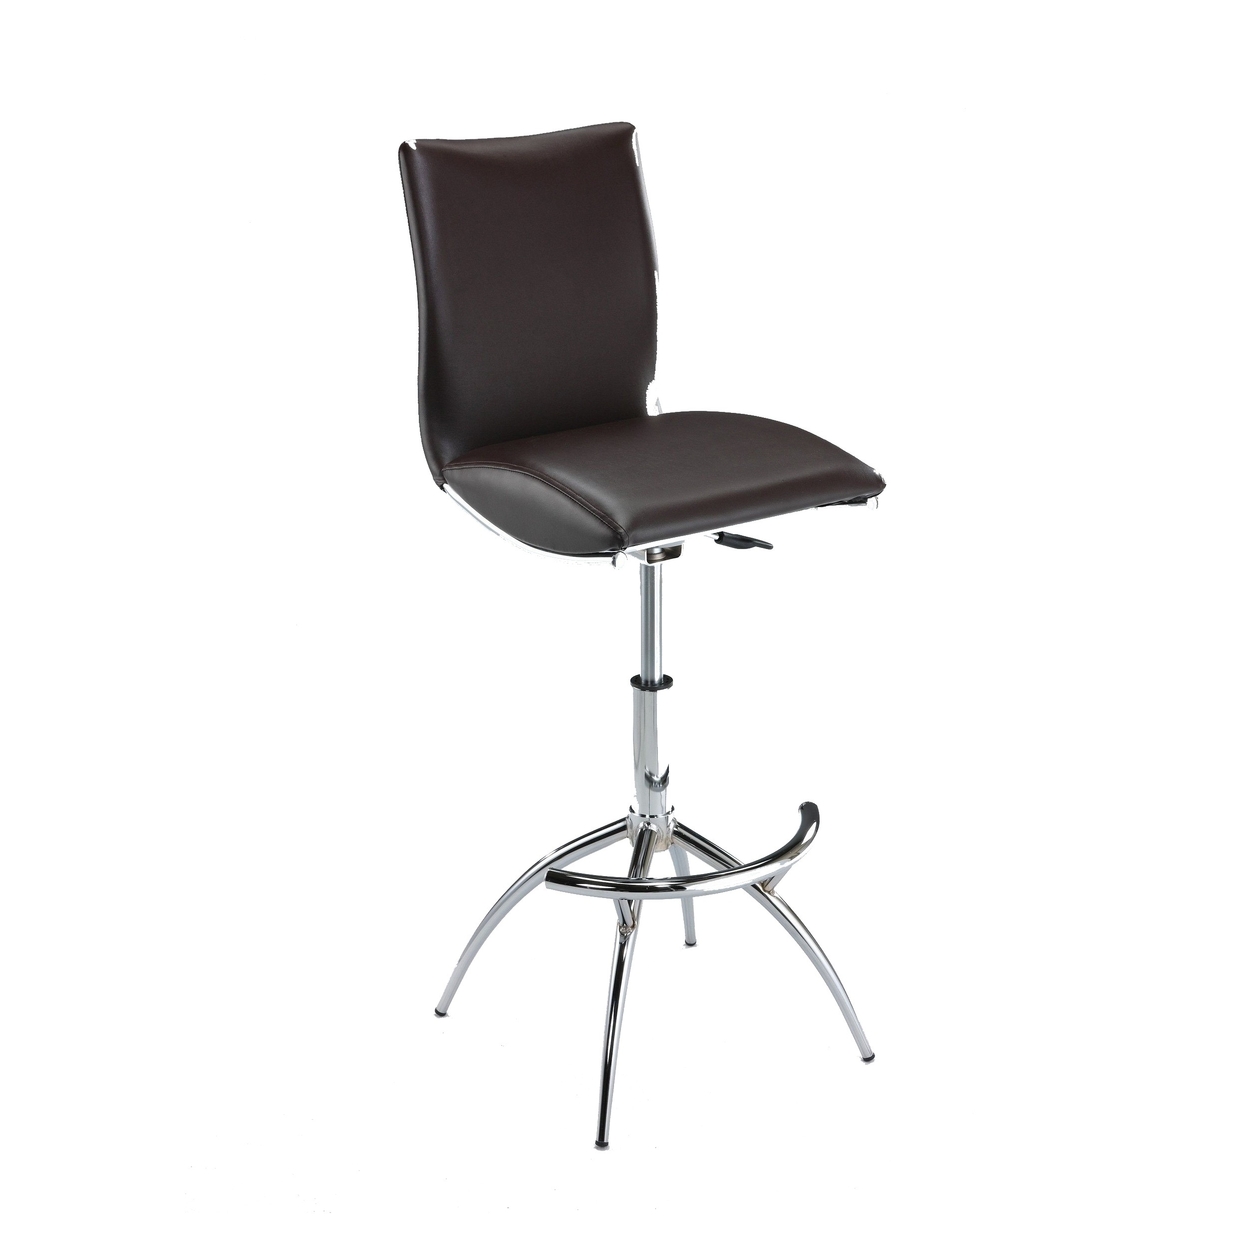 Deko 26-31 Inch Adjustable Height Barstool Chair, Set Of 2, Chrome Brown Faux Leather - Saltoro Sherpi